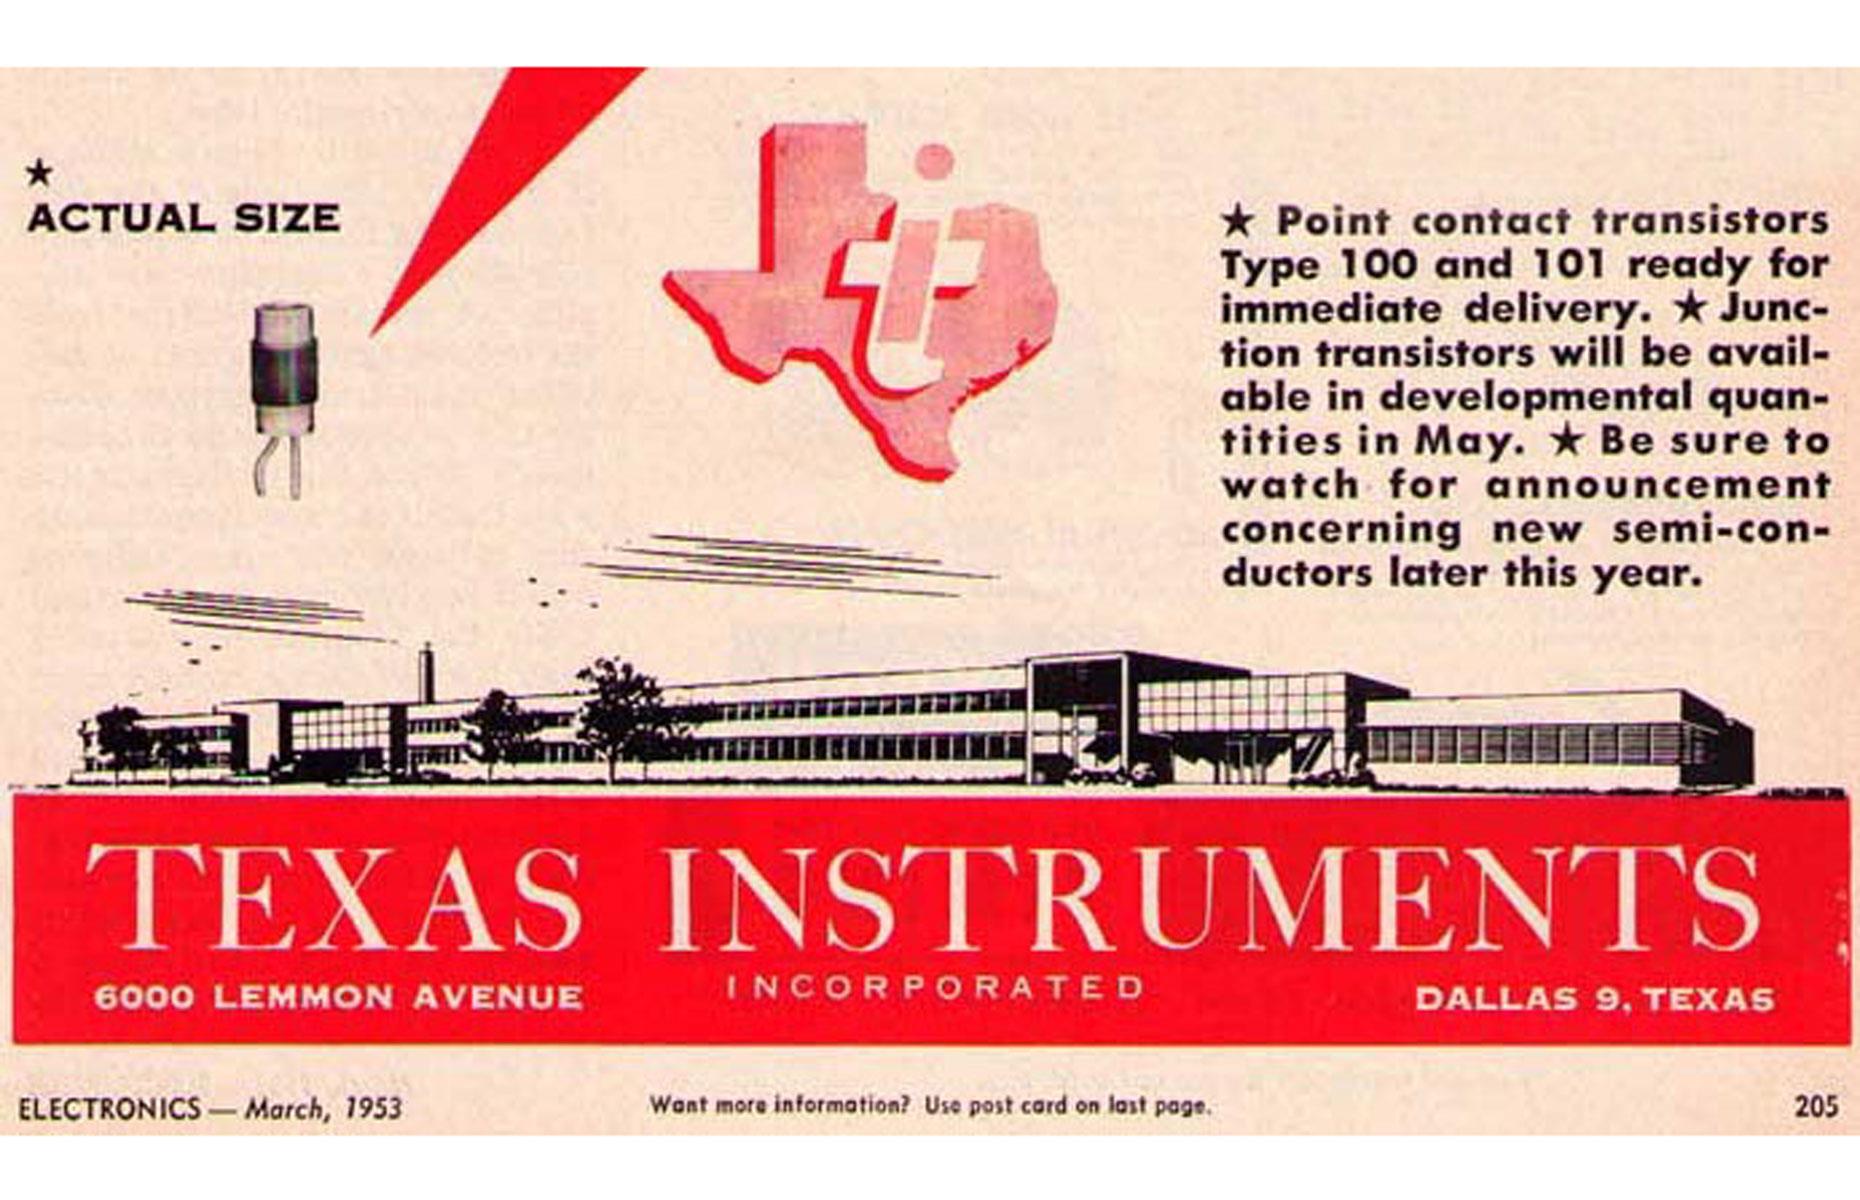 1951: Texas Instruments